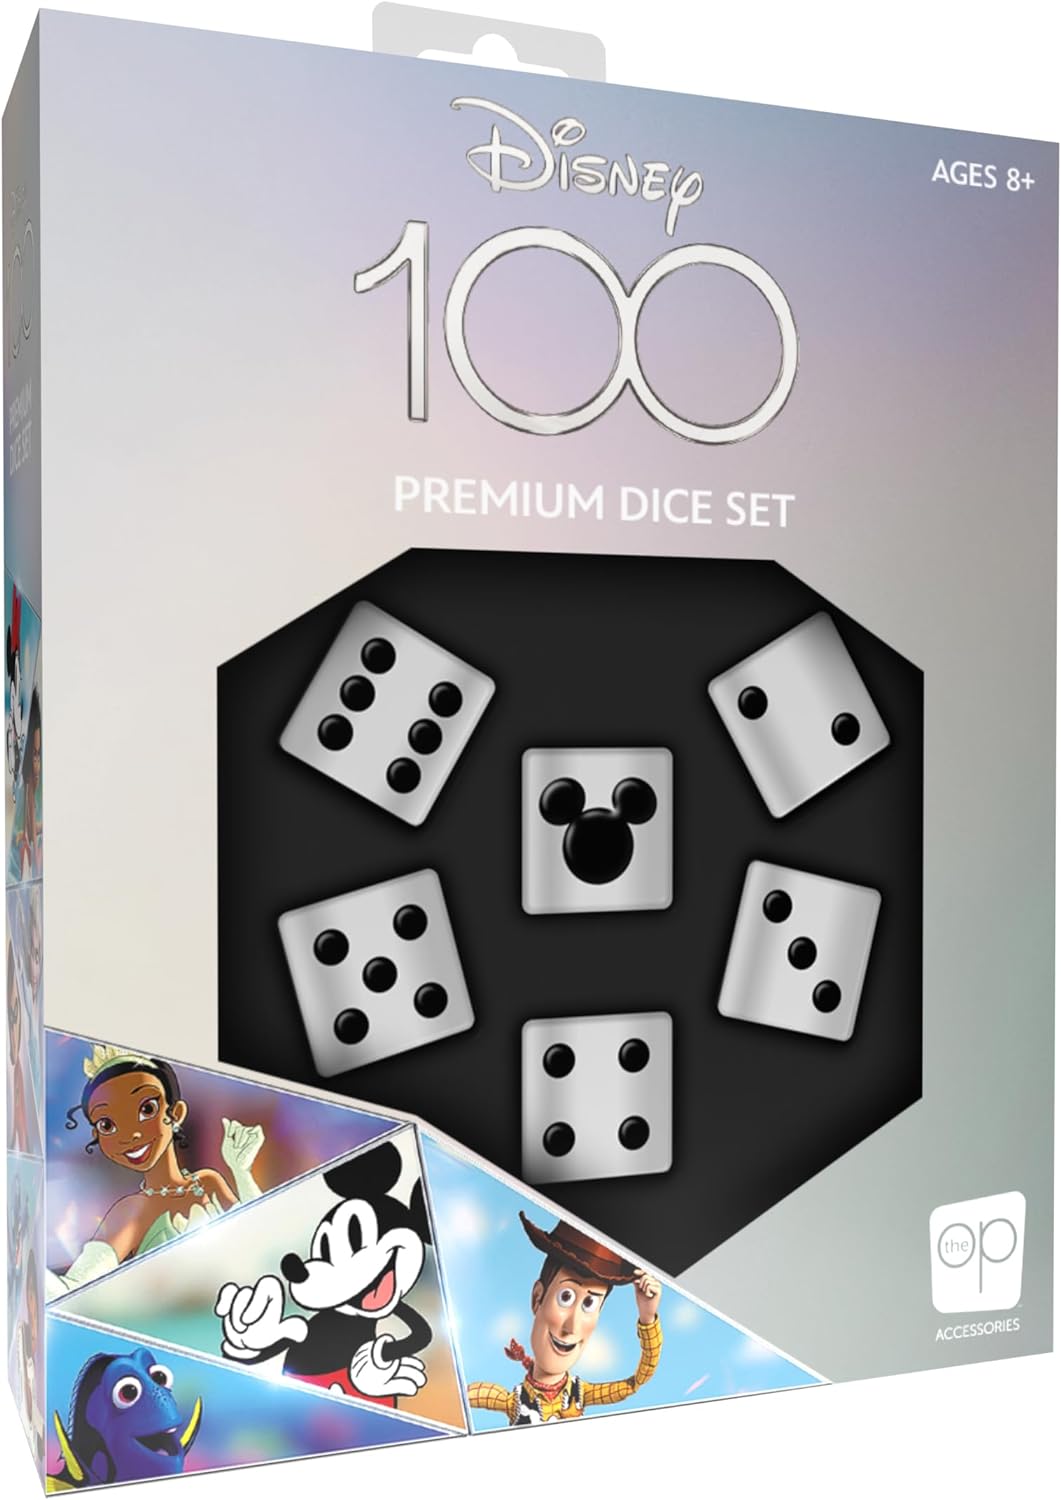 100 Dice Game 